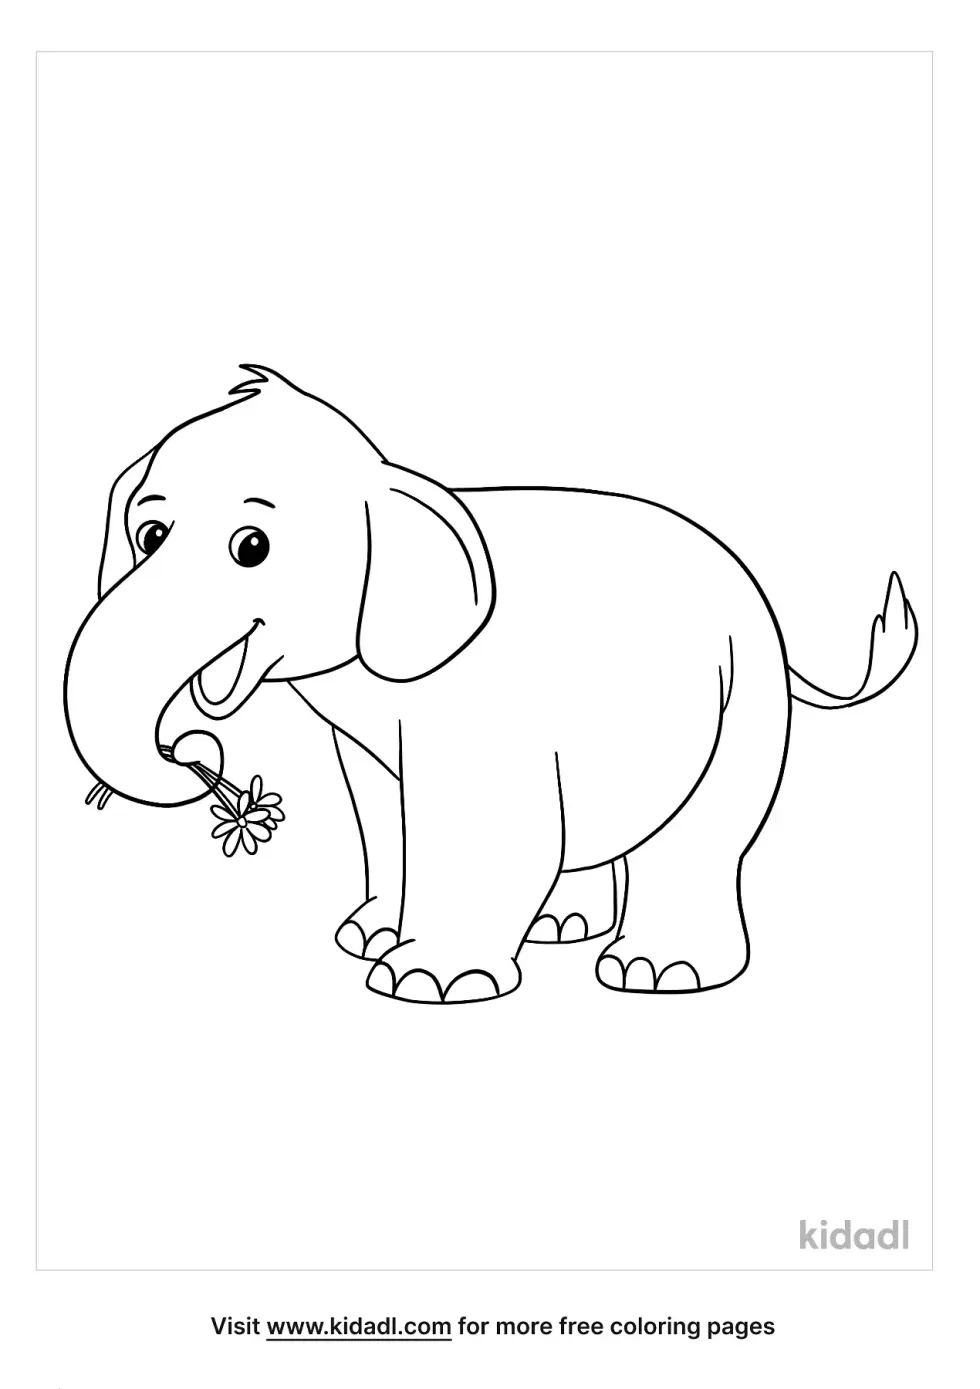 Elephant With Flowers